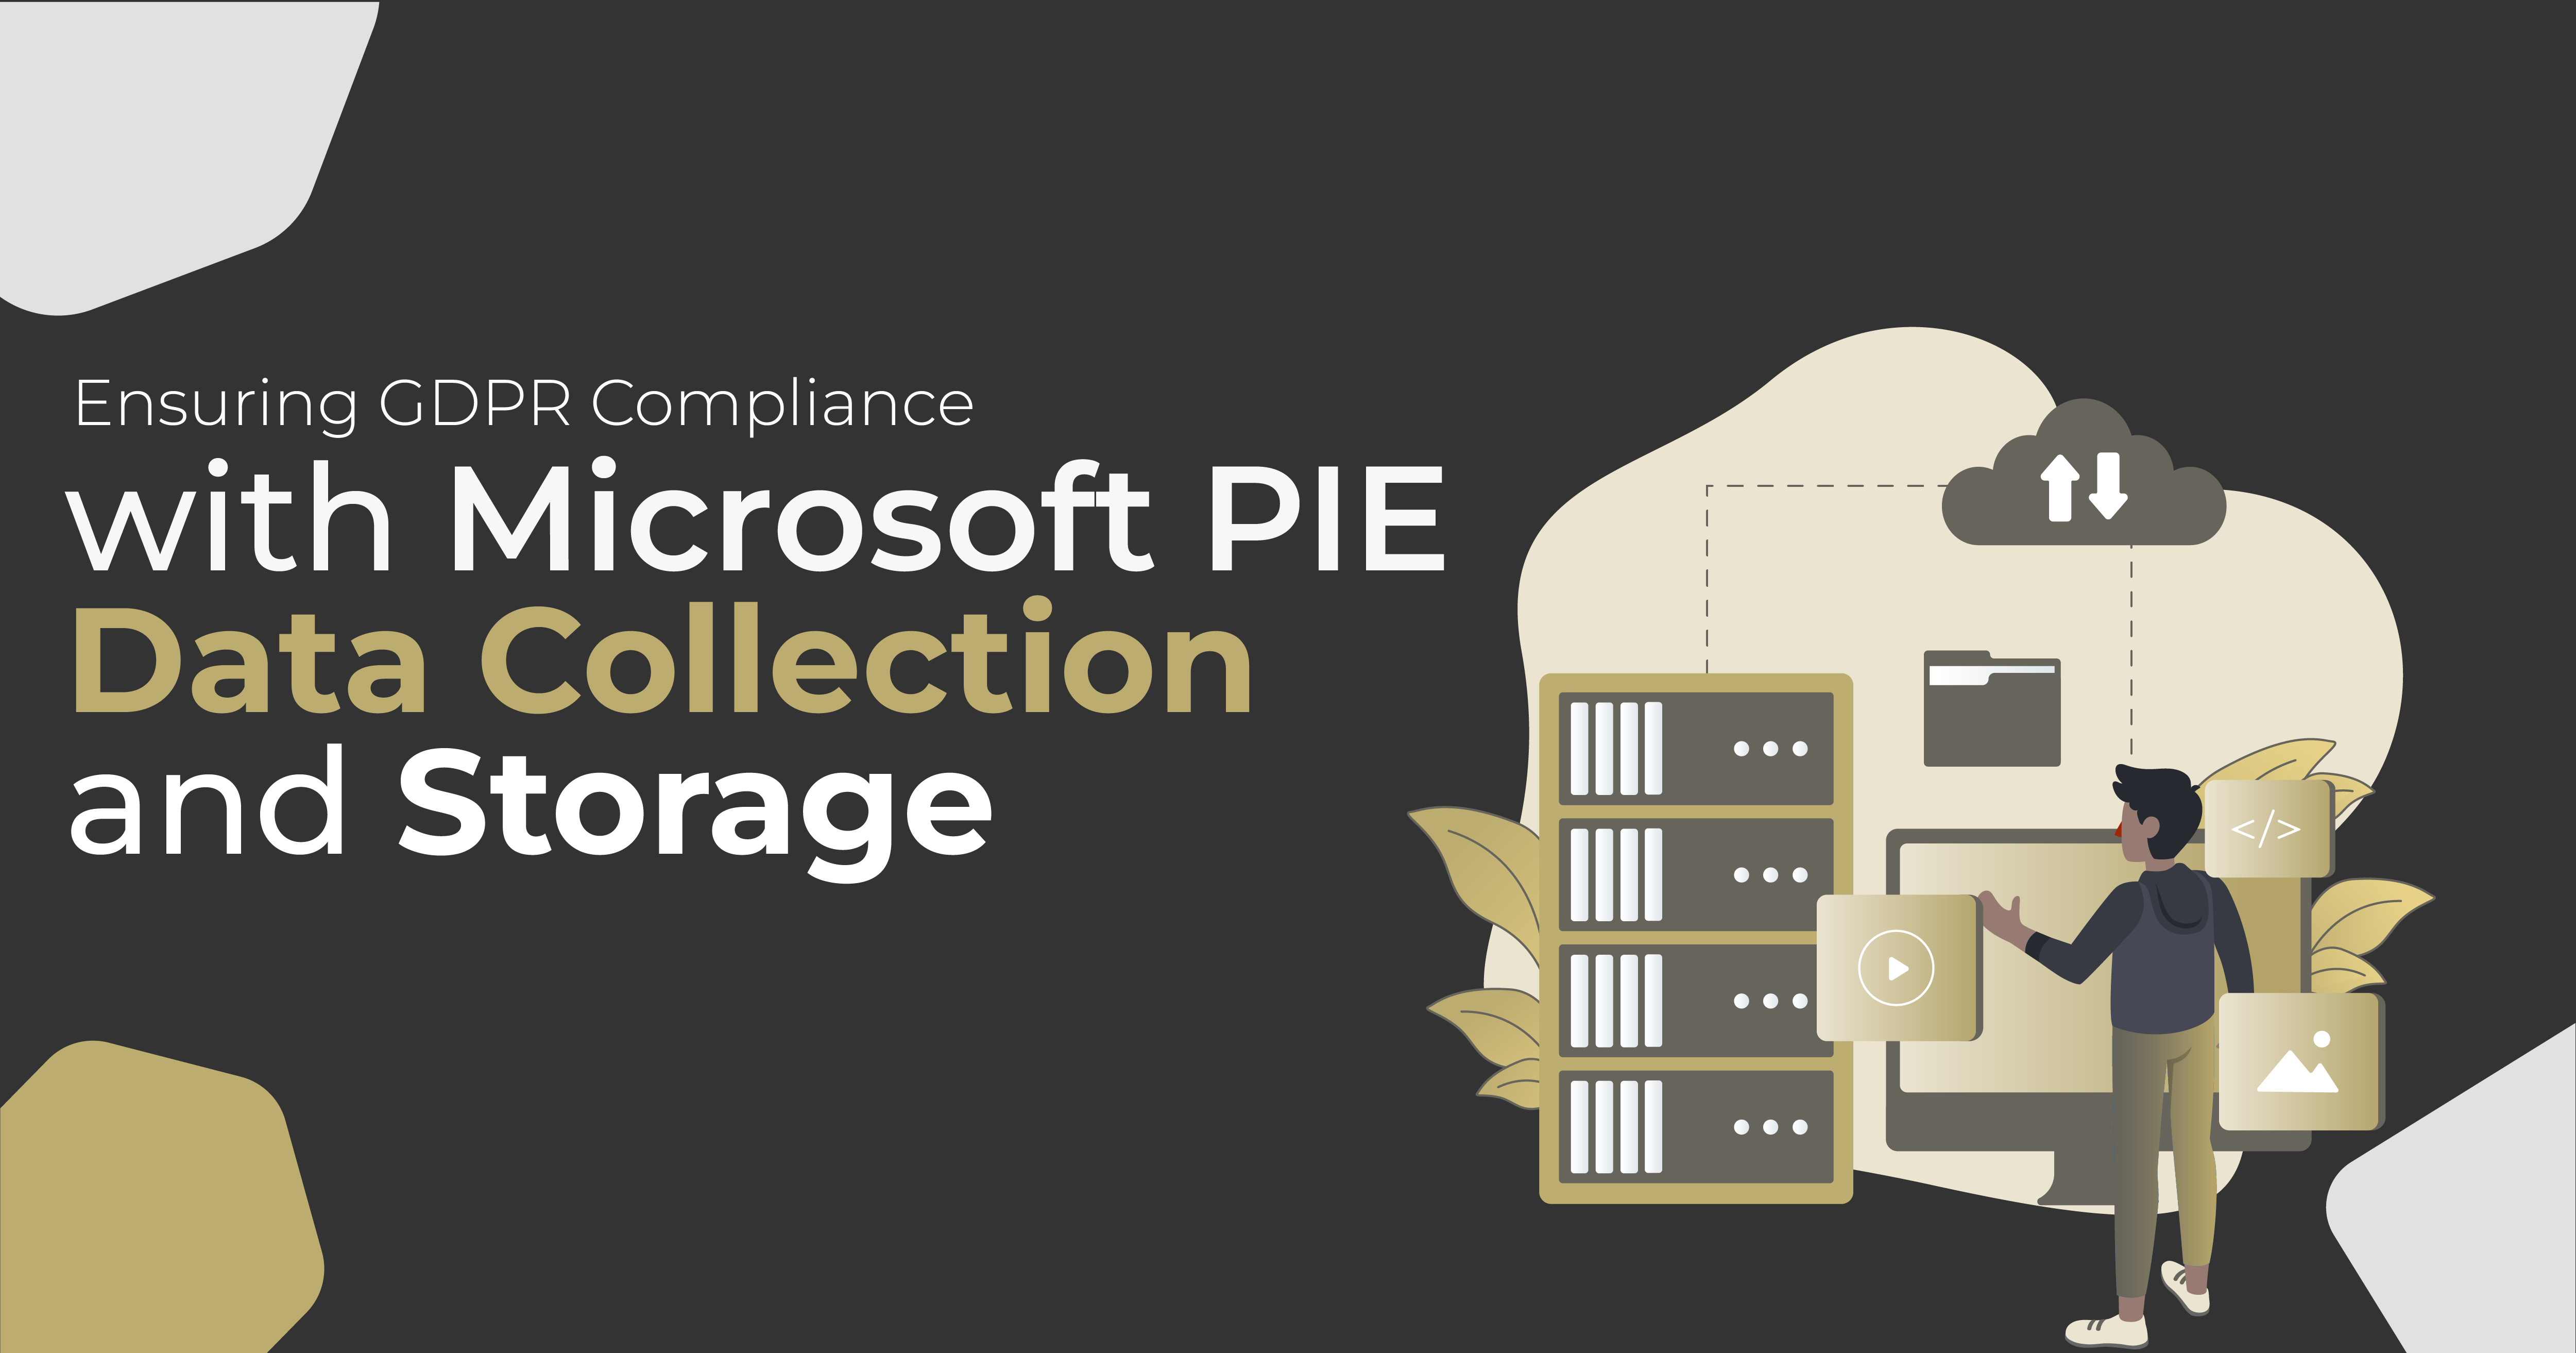 Microsoft PIE Data Collection